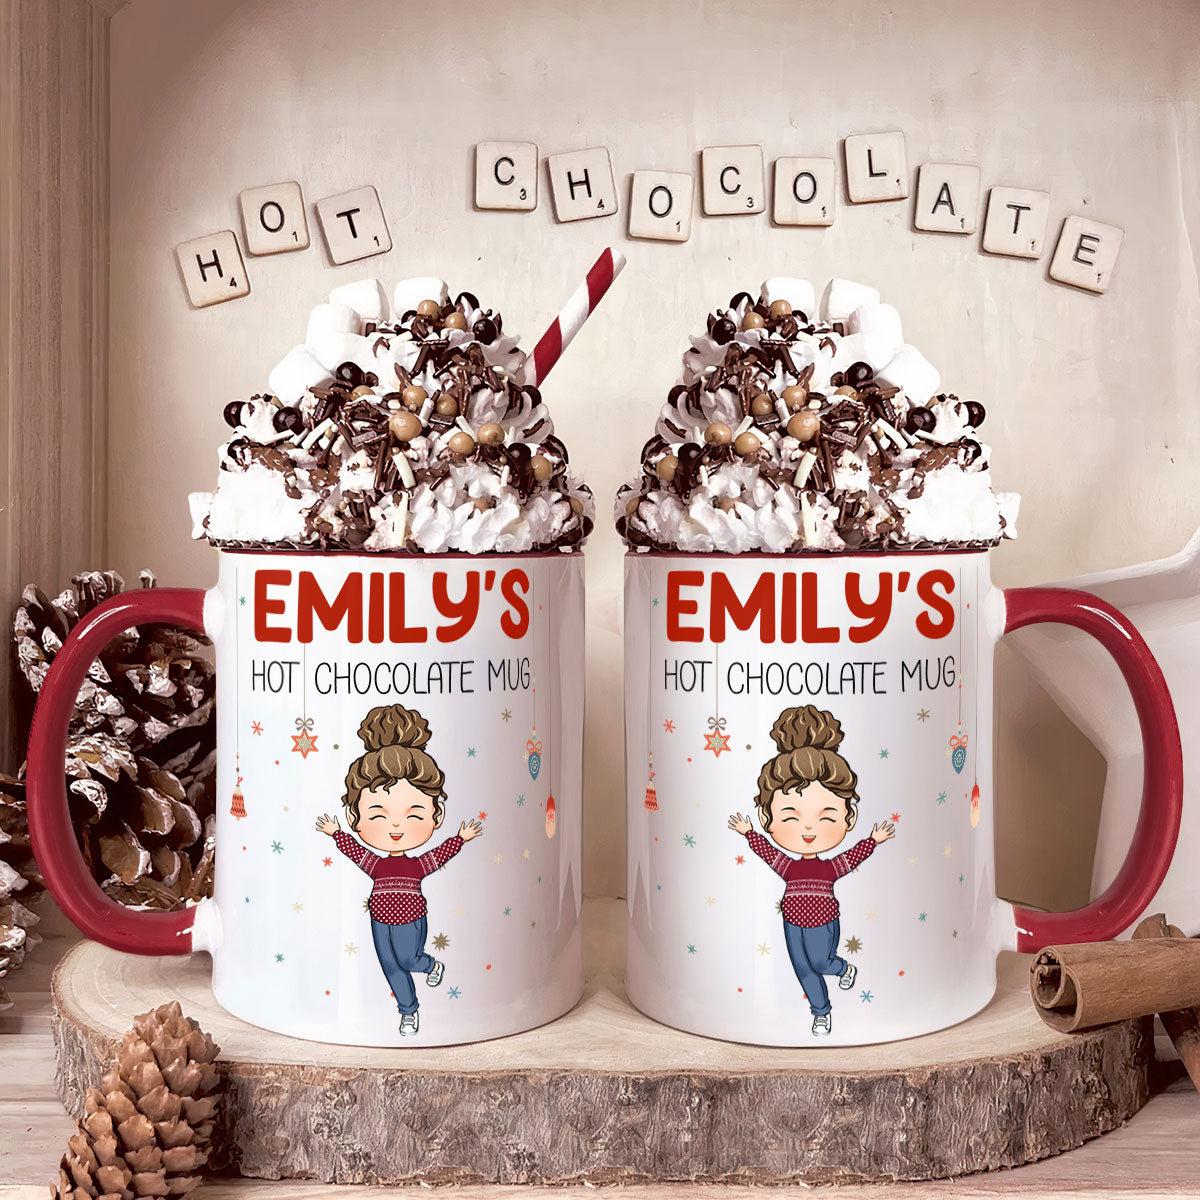 Kid's Hot Chocolate - Kid Personalized Hot Chocolate Mug, Cup - Christ -  Pawfect House